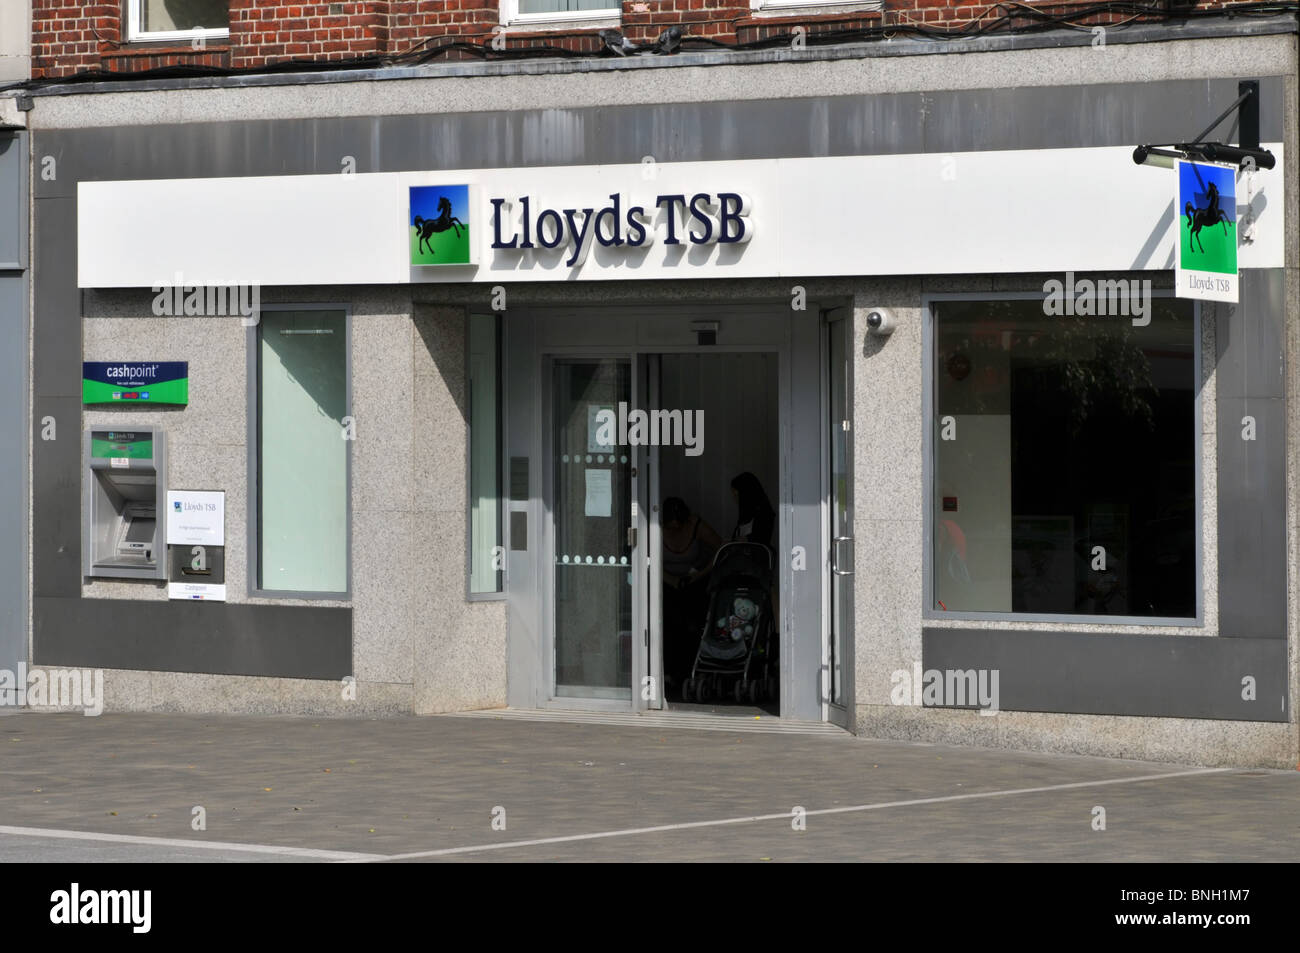 Lloyds Bank high street branch premises Stock Photo